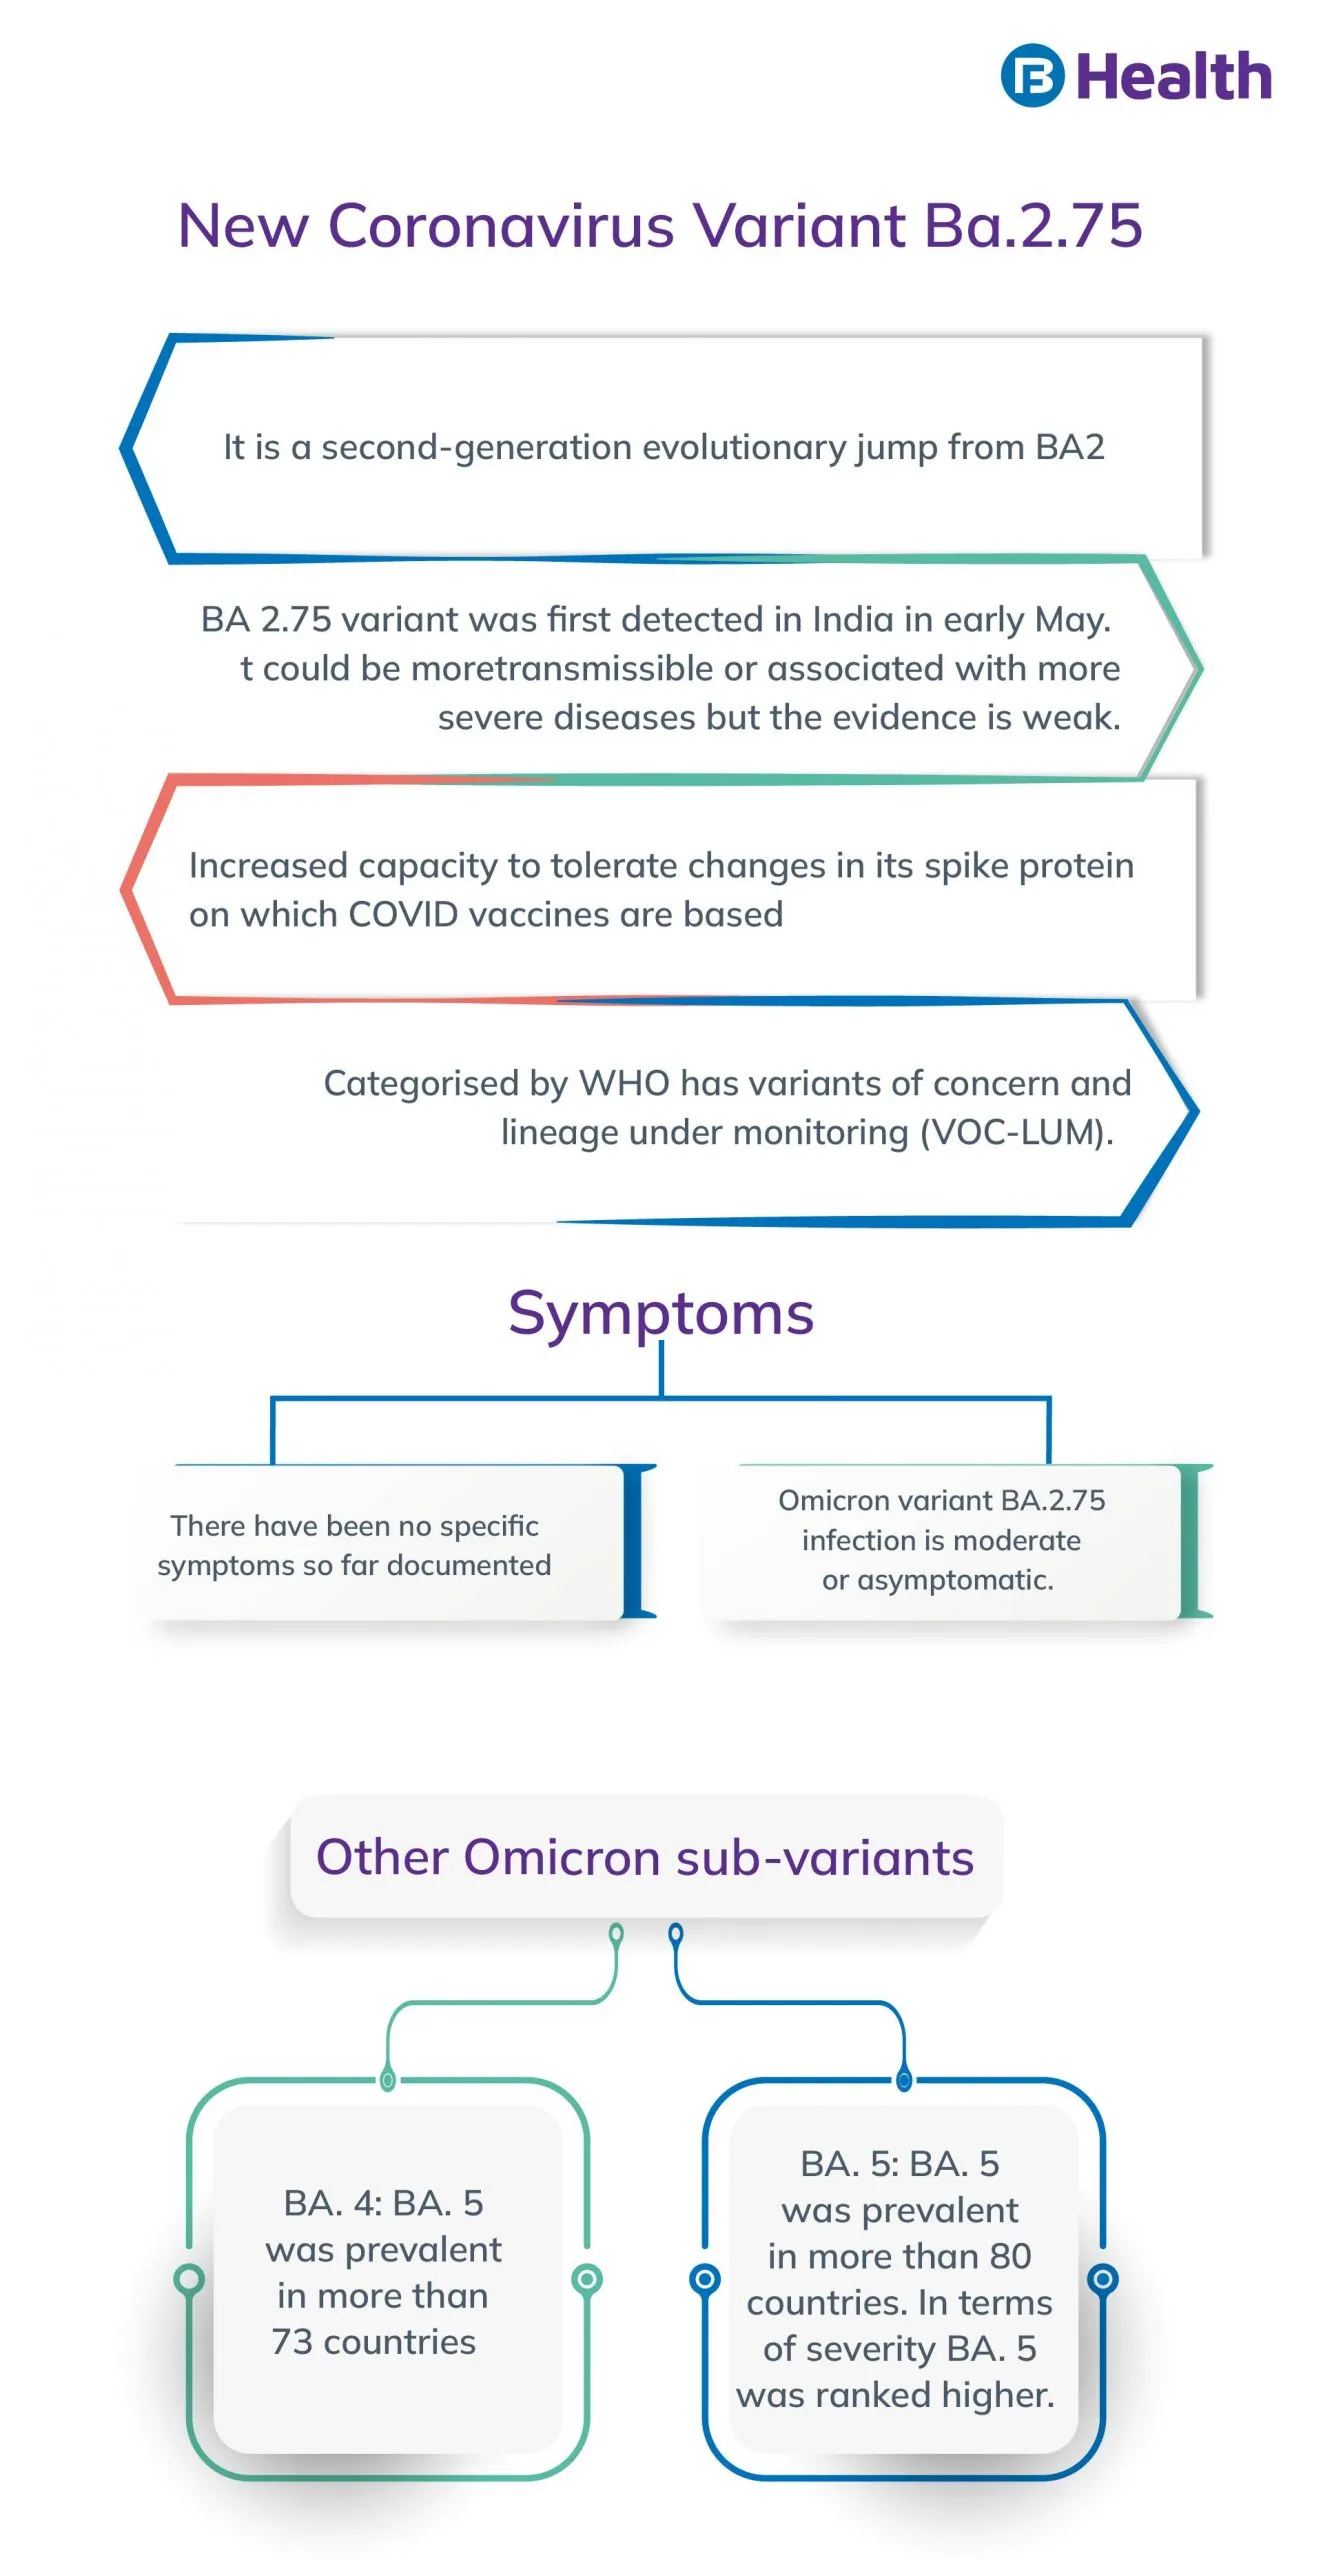 Symptoms of Omicron Variant BA.2.75